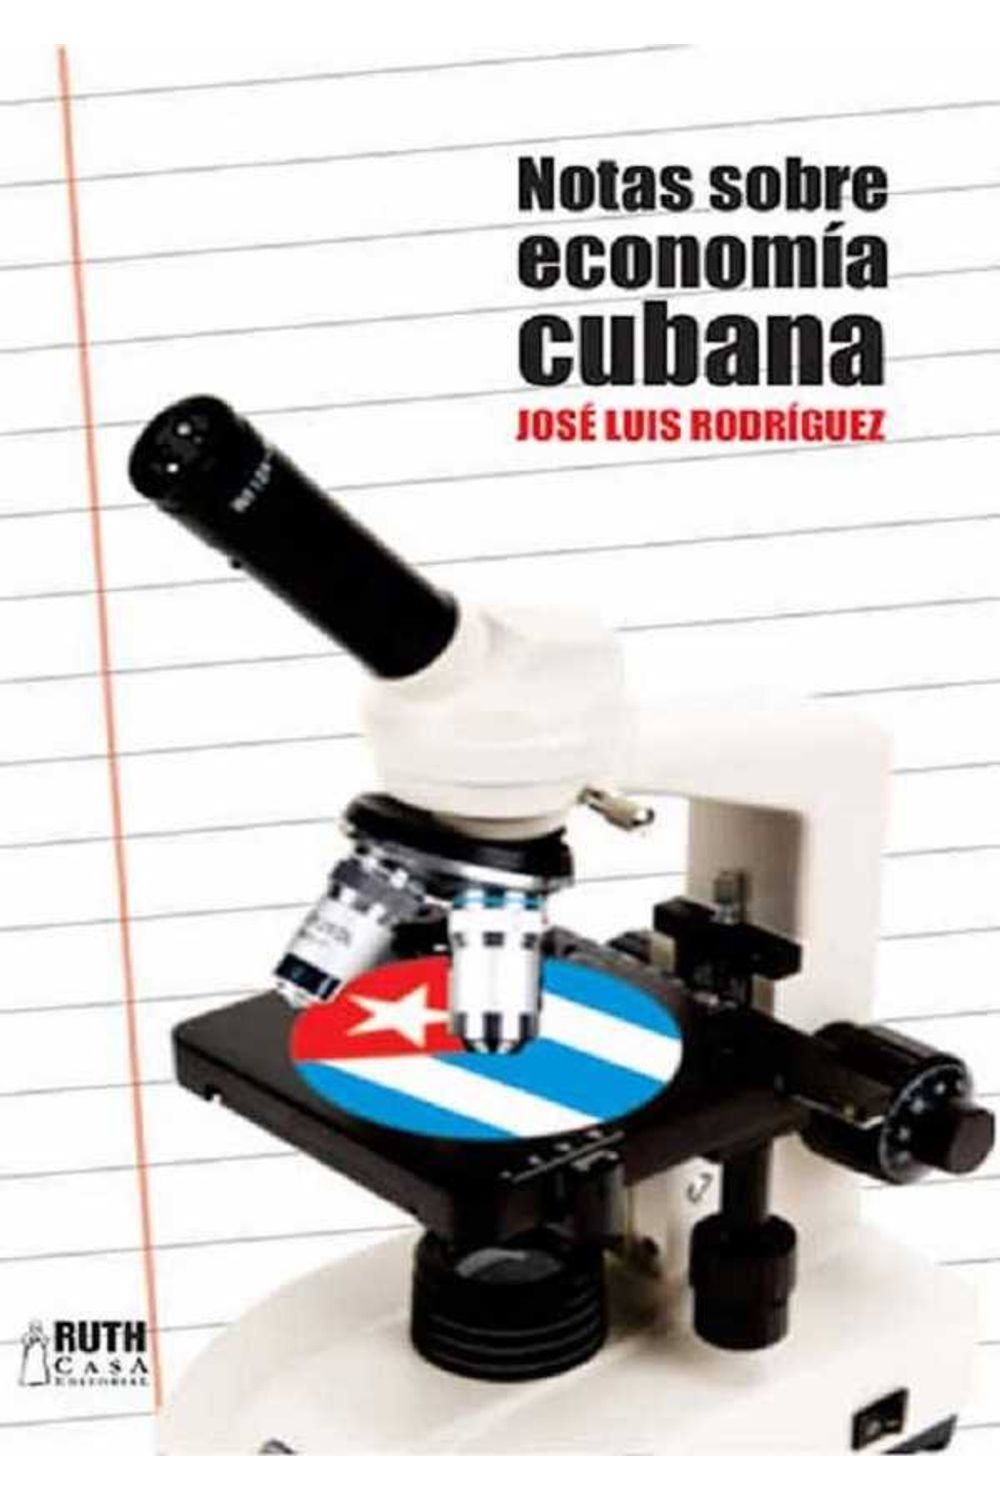 bw-notas-sobre-economiacutea-cubana-ruth-9789962645887